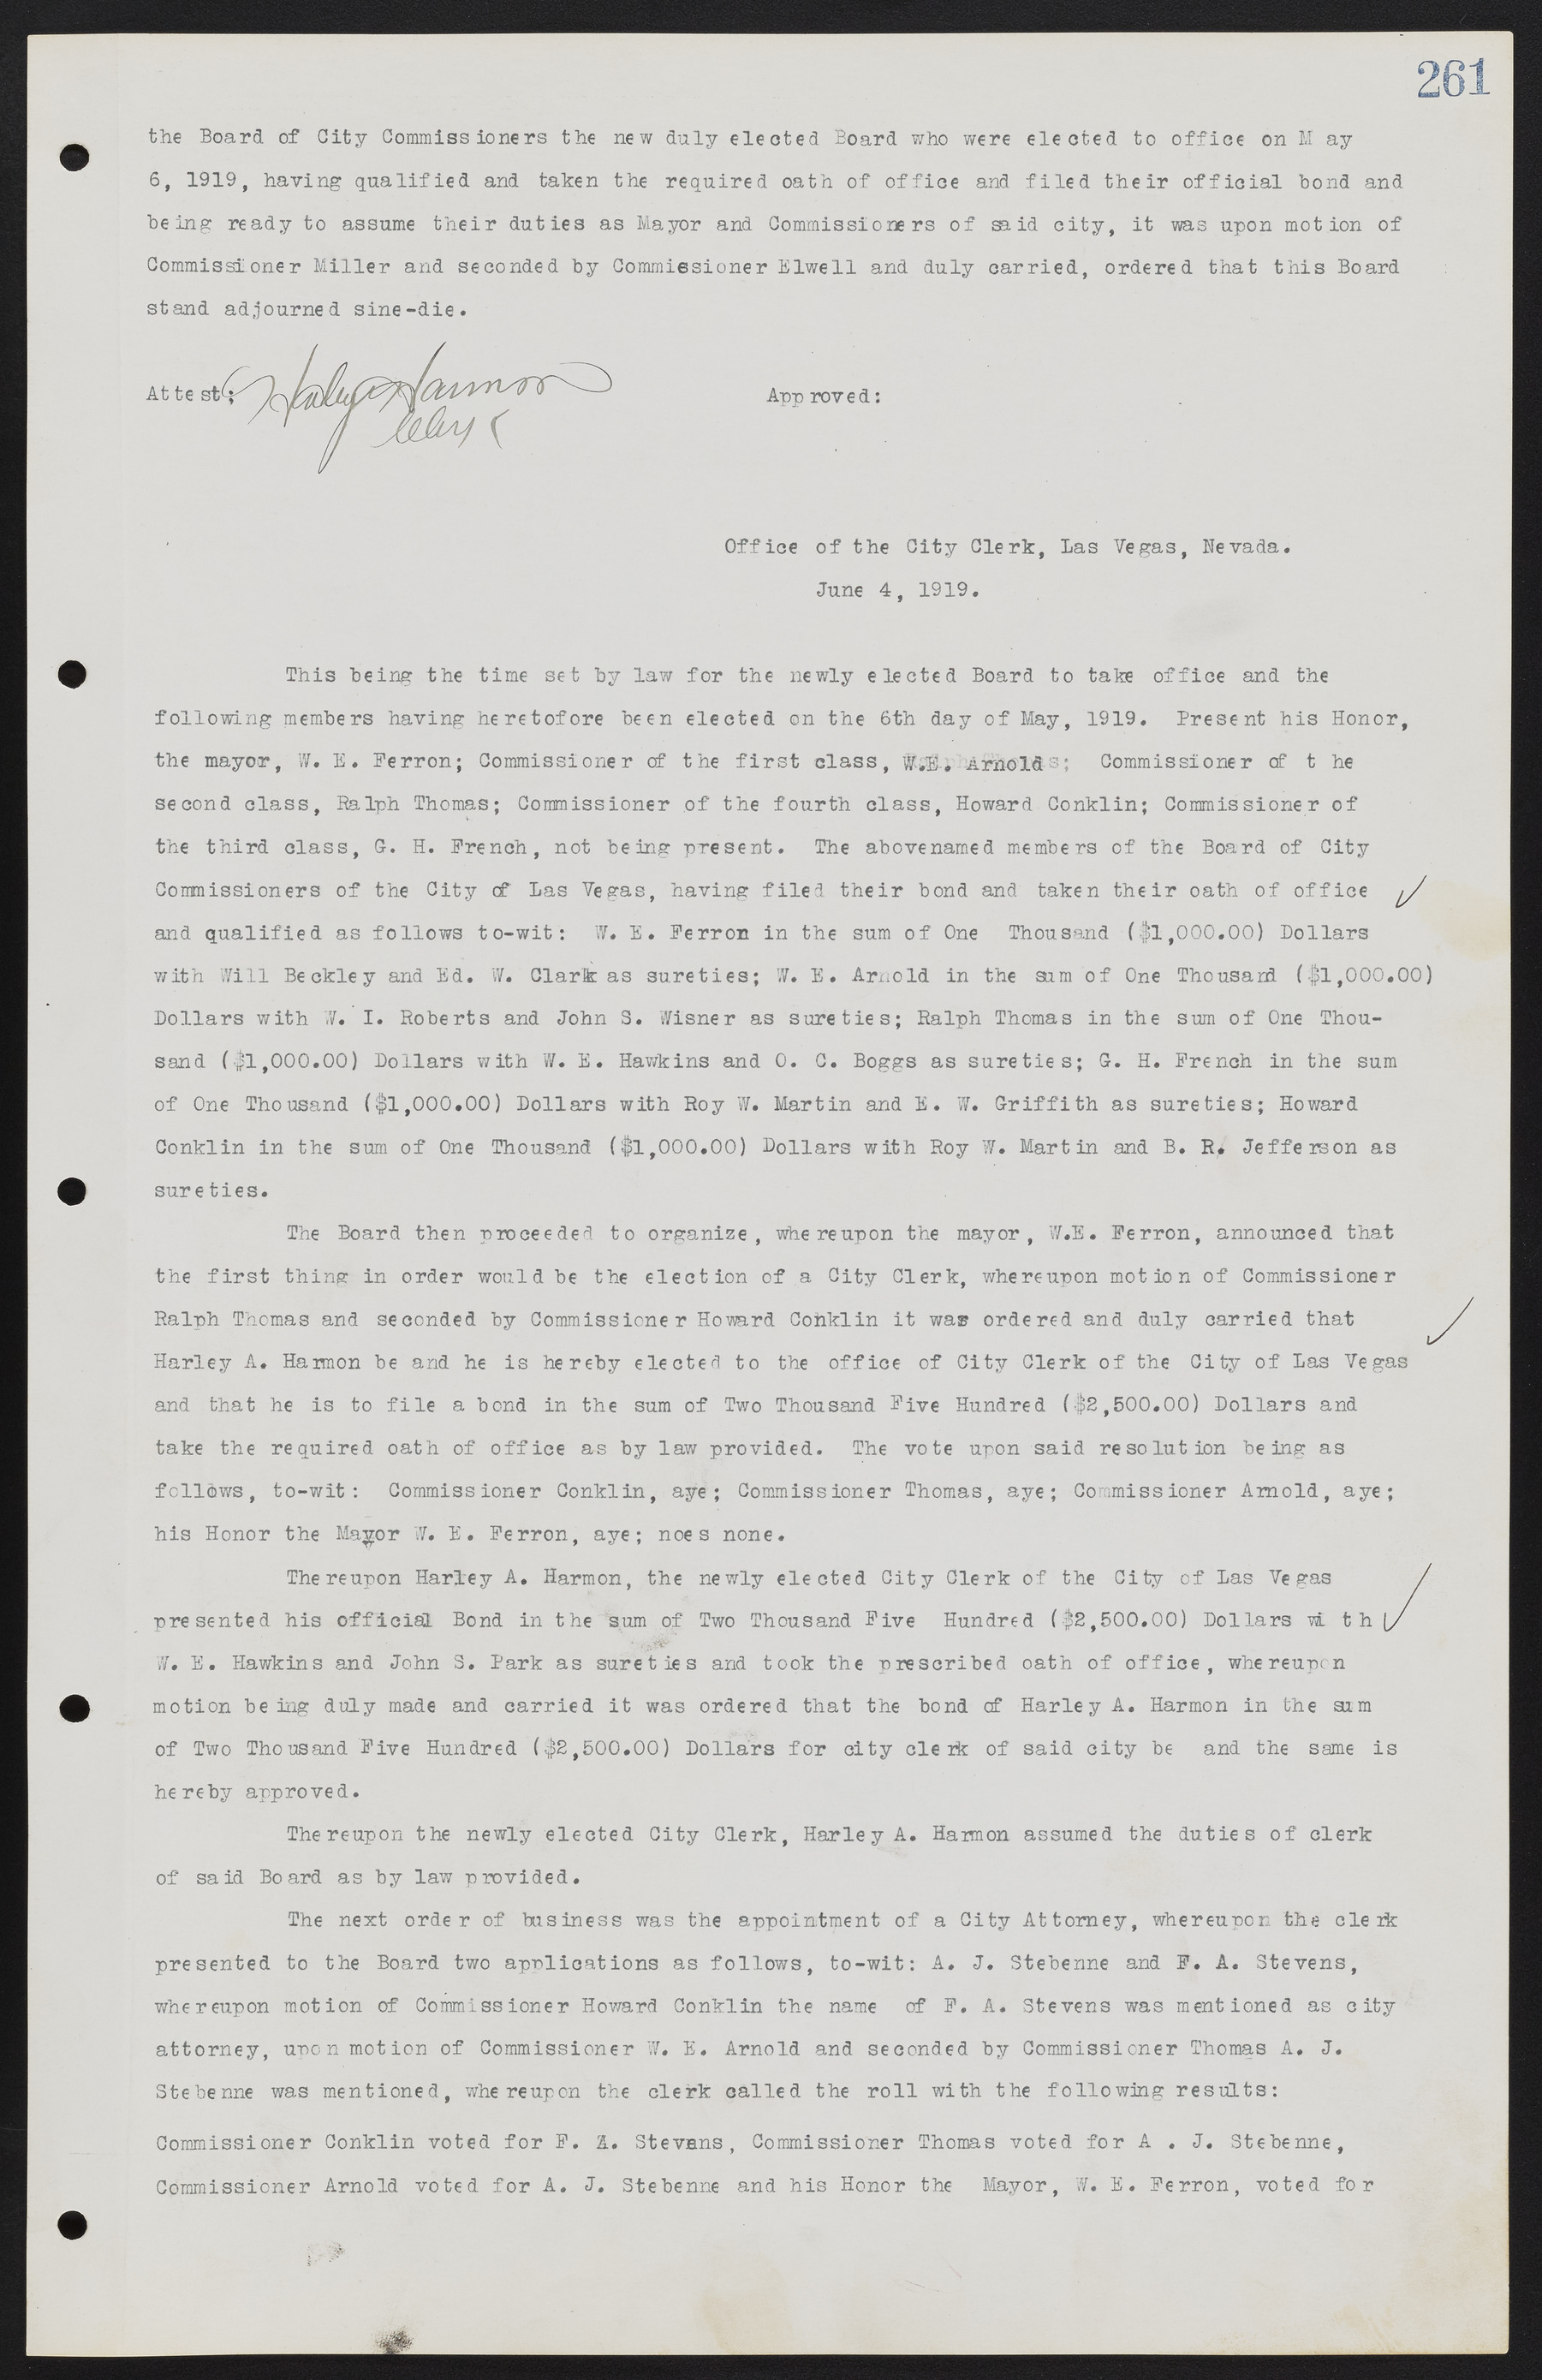 Las Vegas City Commission Minutes, June 22, 1911 to February 7, 1922, lvc000001-277